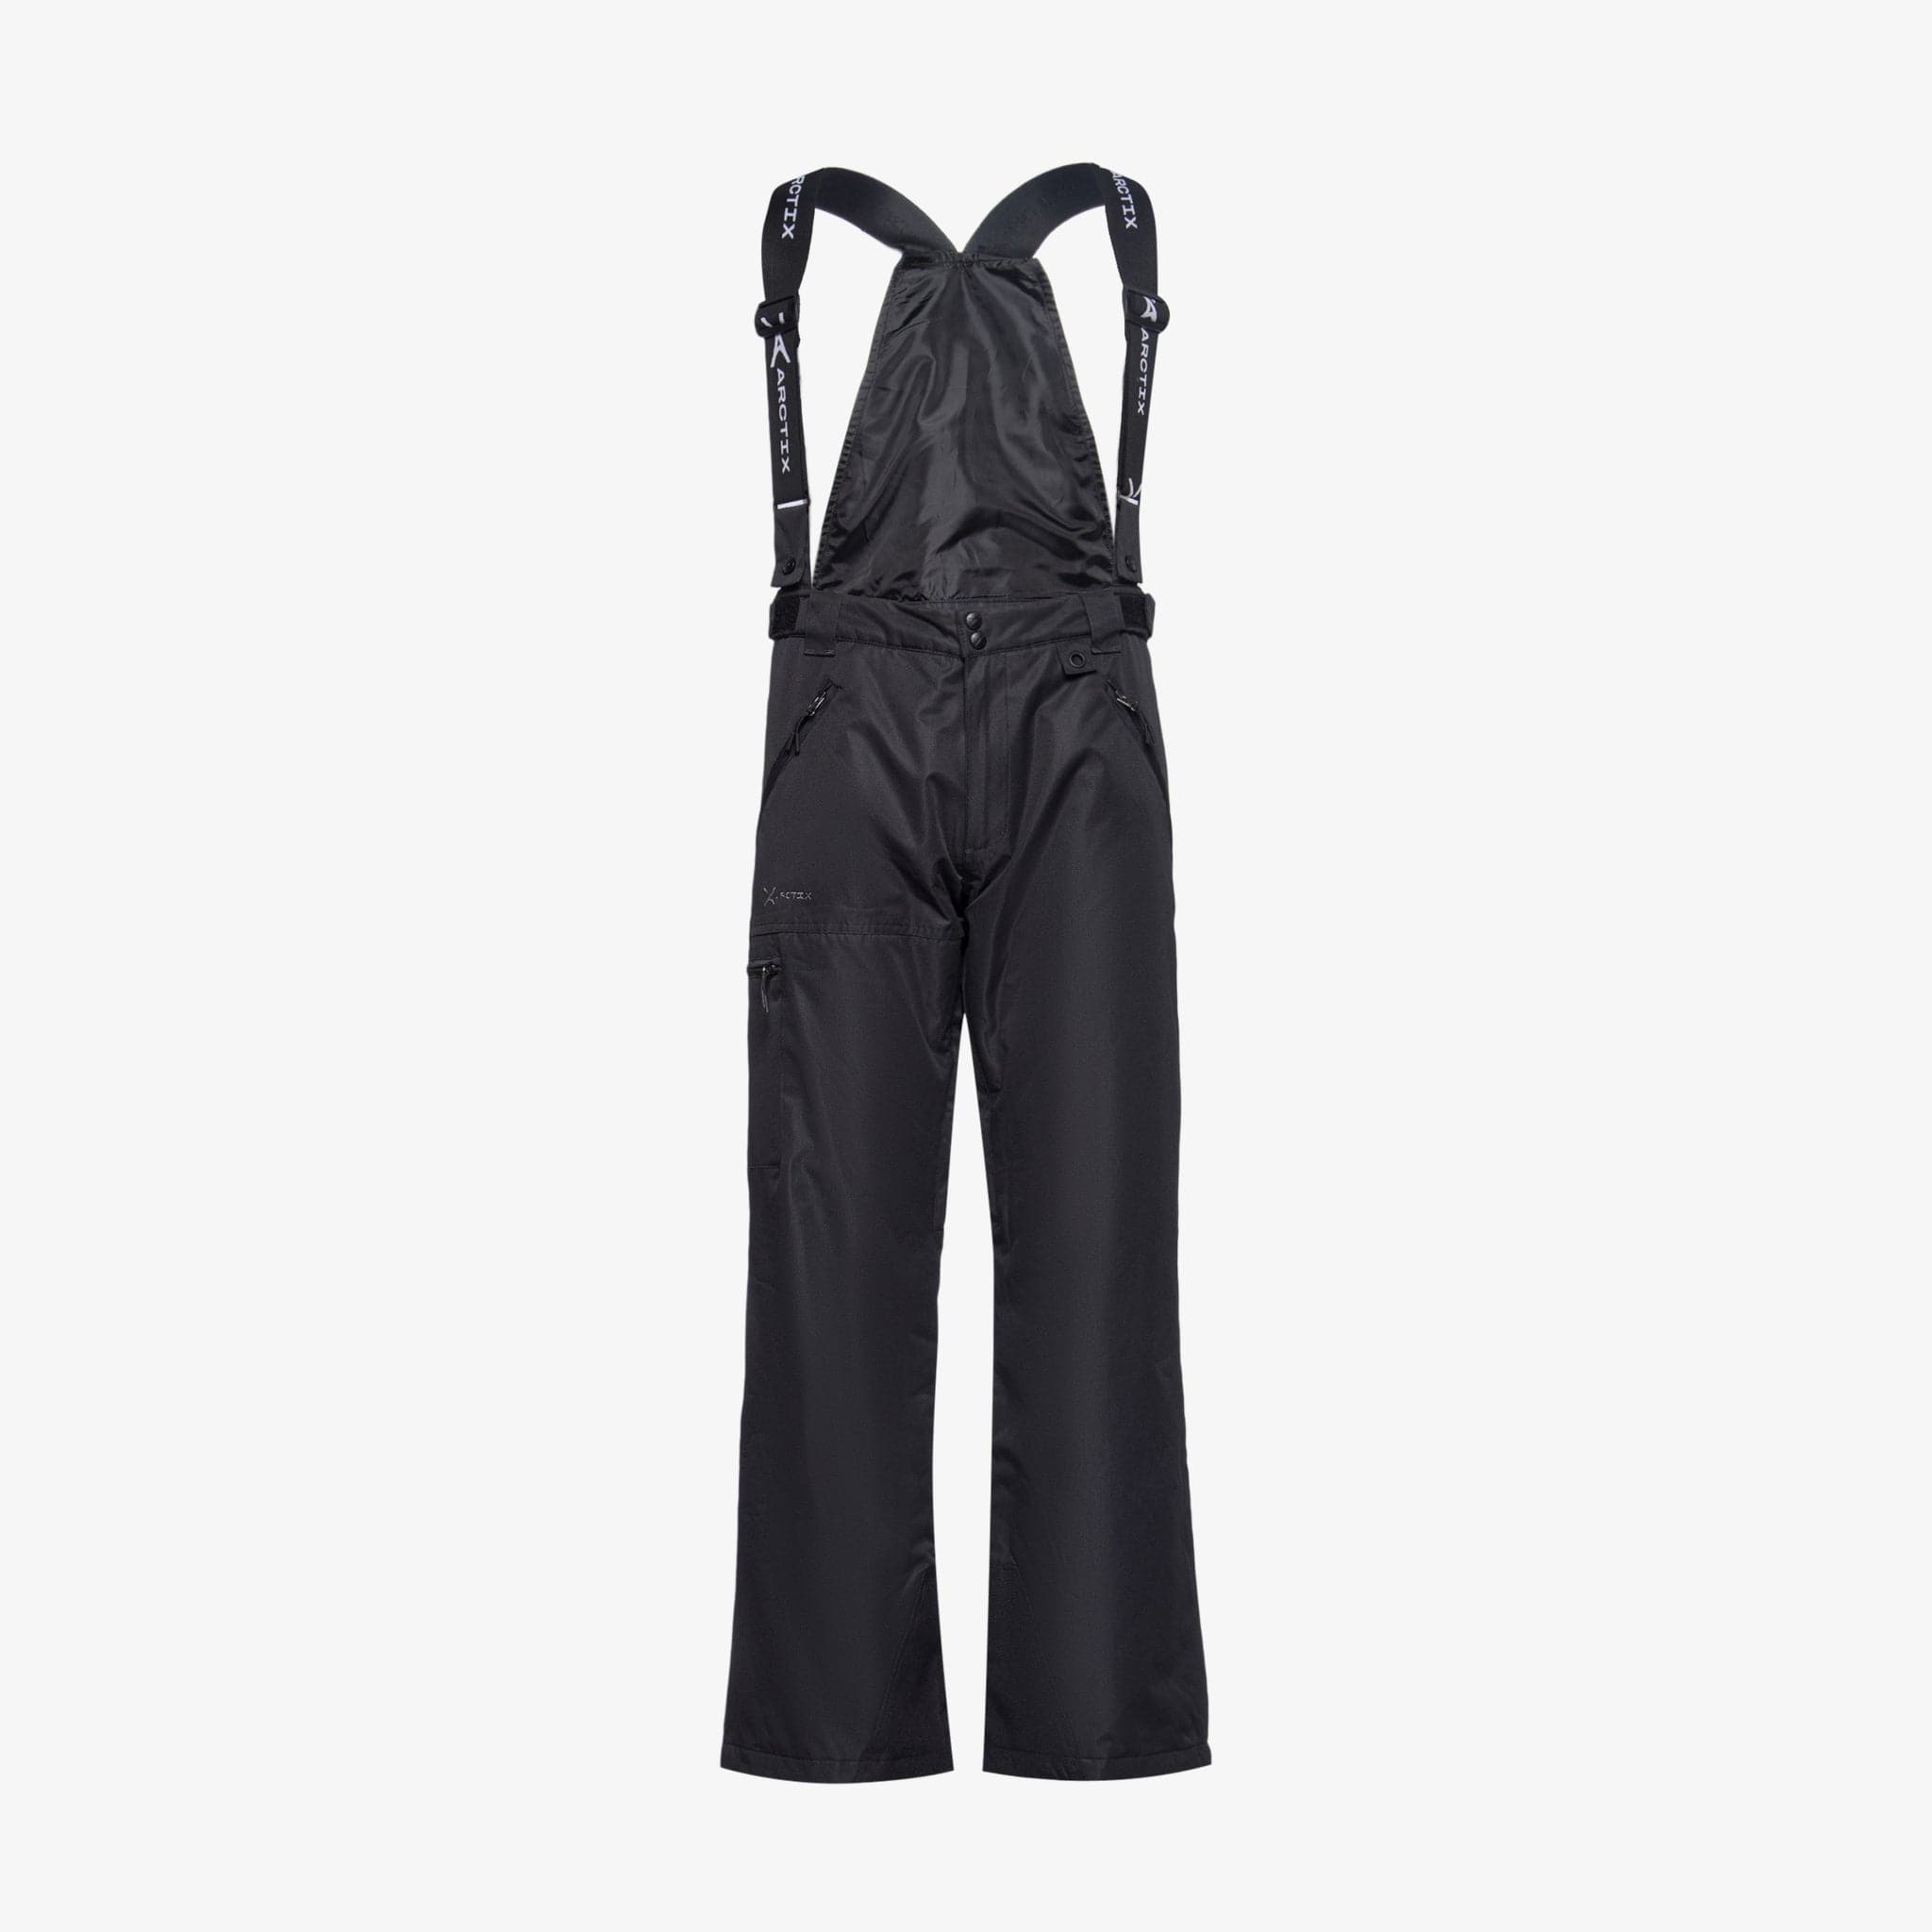 Arctix Men's Essential Snow Pants, Black - 3XL (48-50W x 34L)